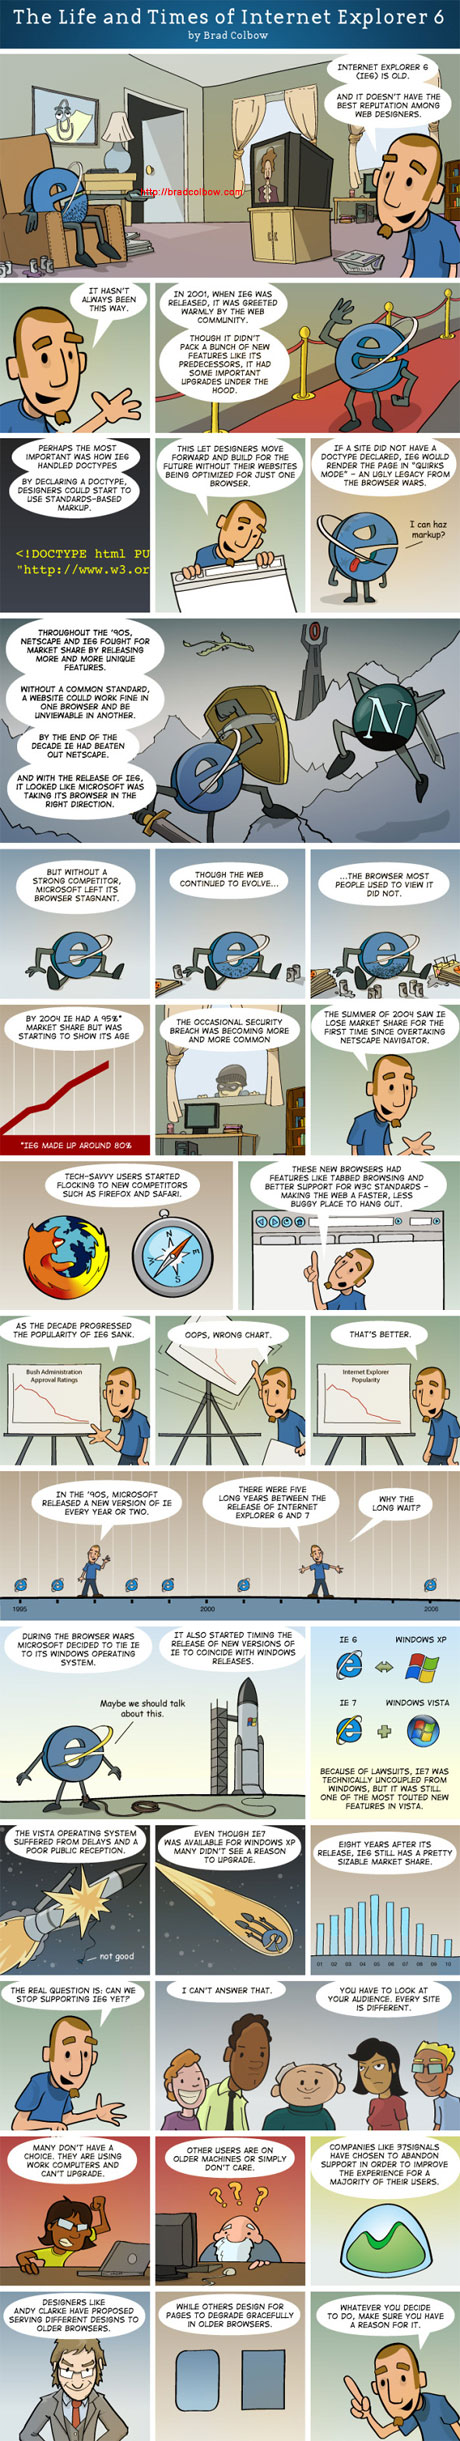 Internet Explorer 6 comic strip by Brad Colbow